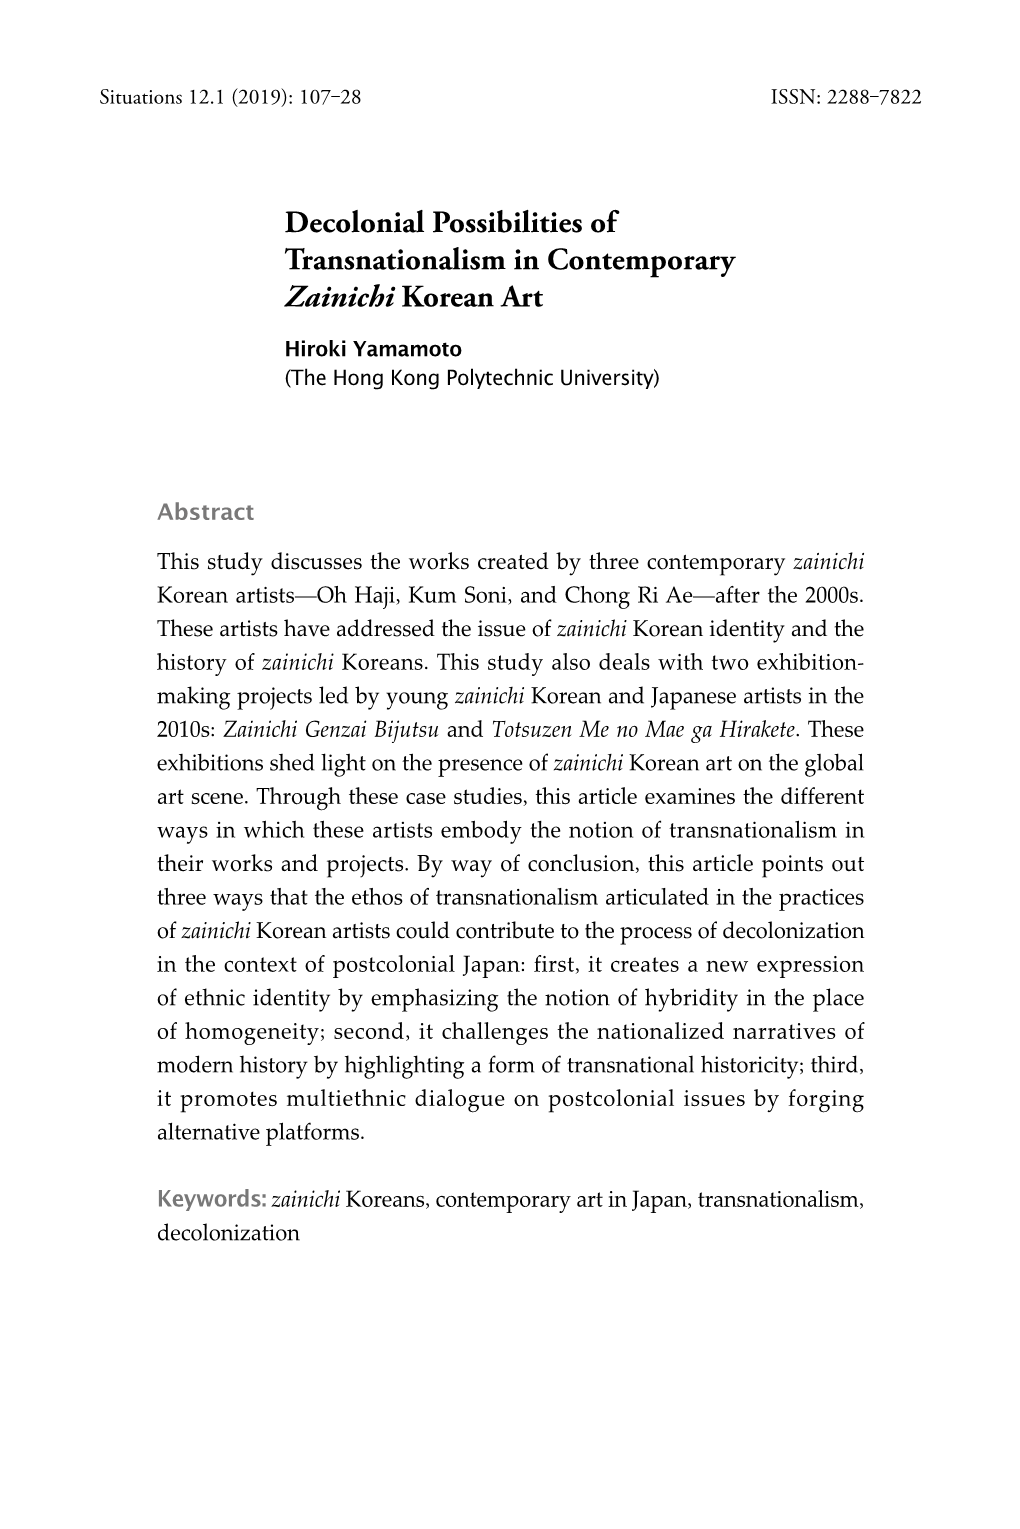 Decolonial Possibilities of Transnationalism in Contemporary Zainichi Korean Art